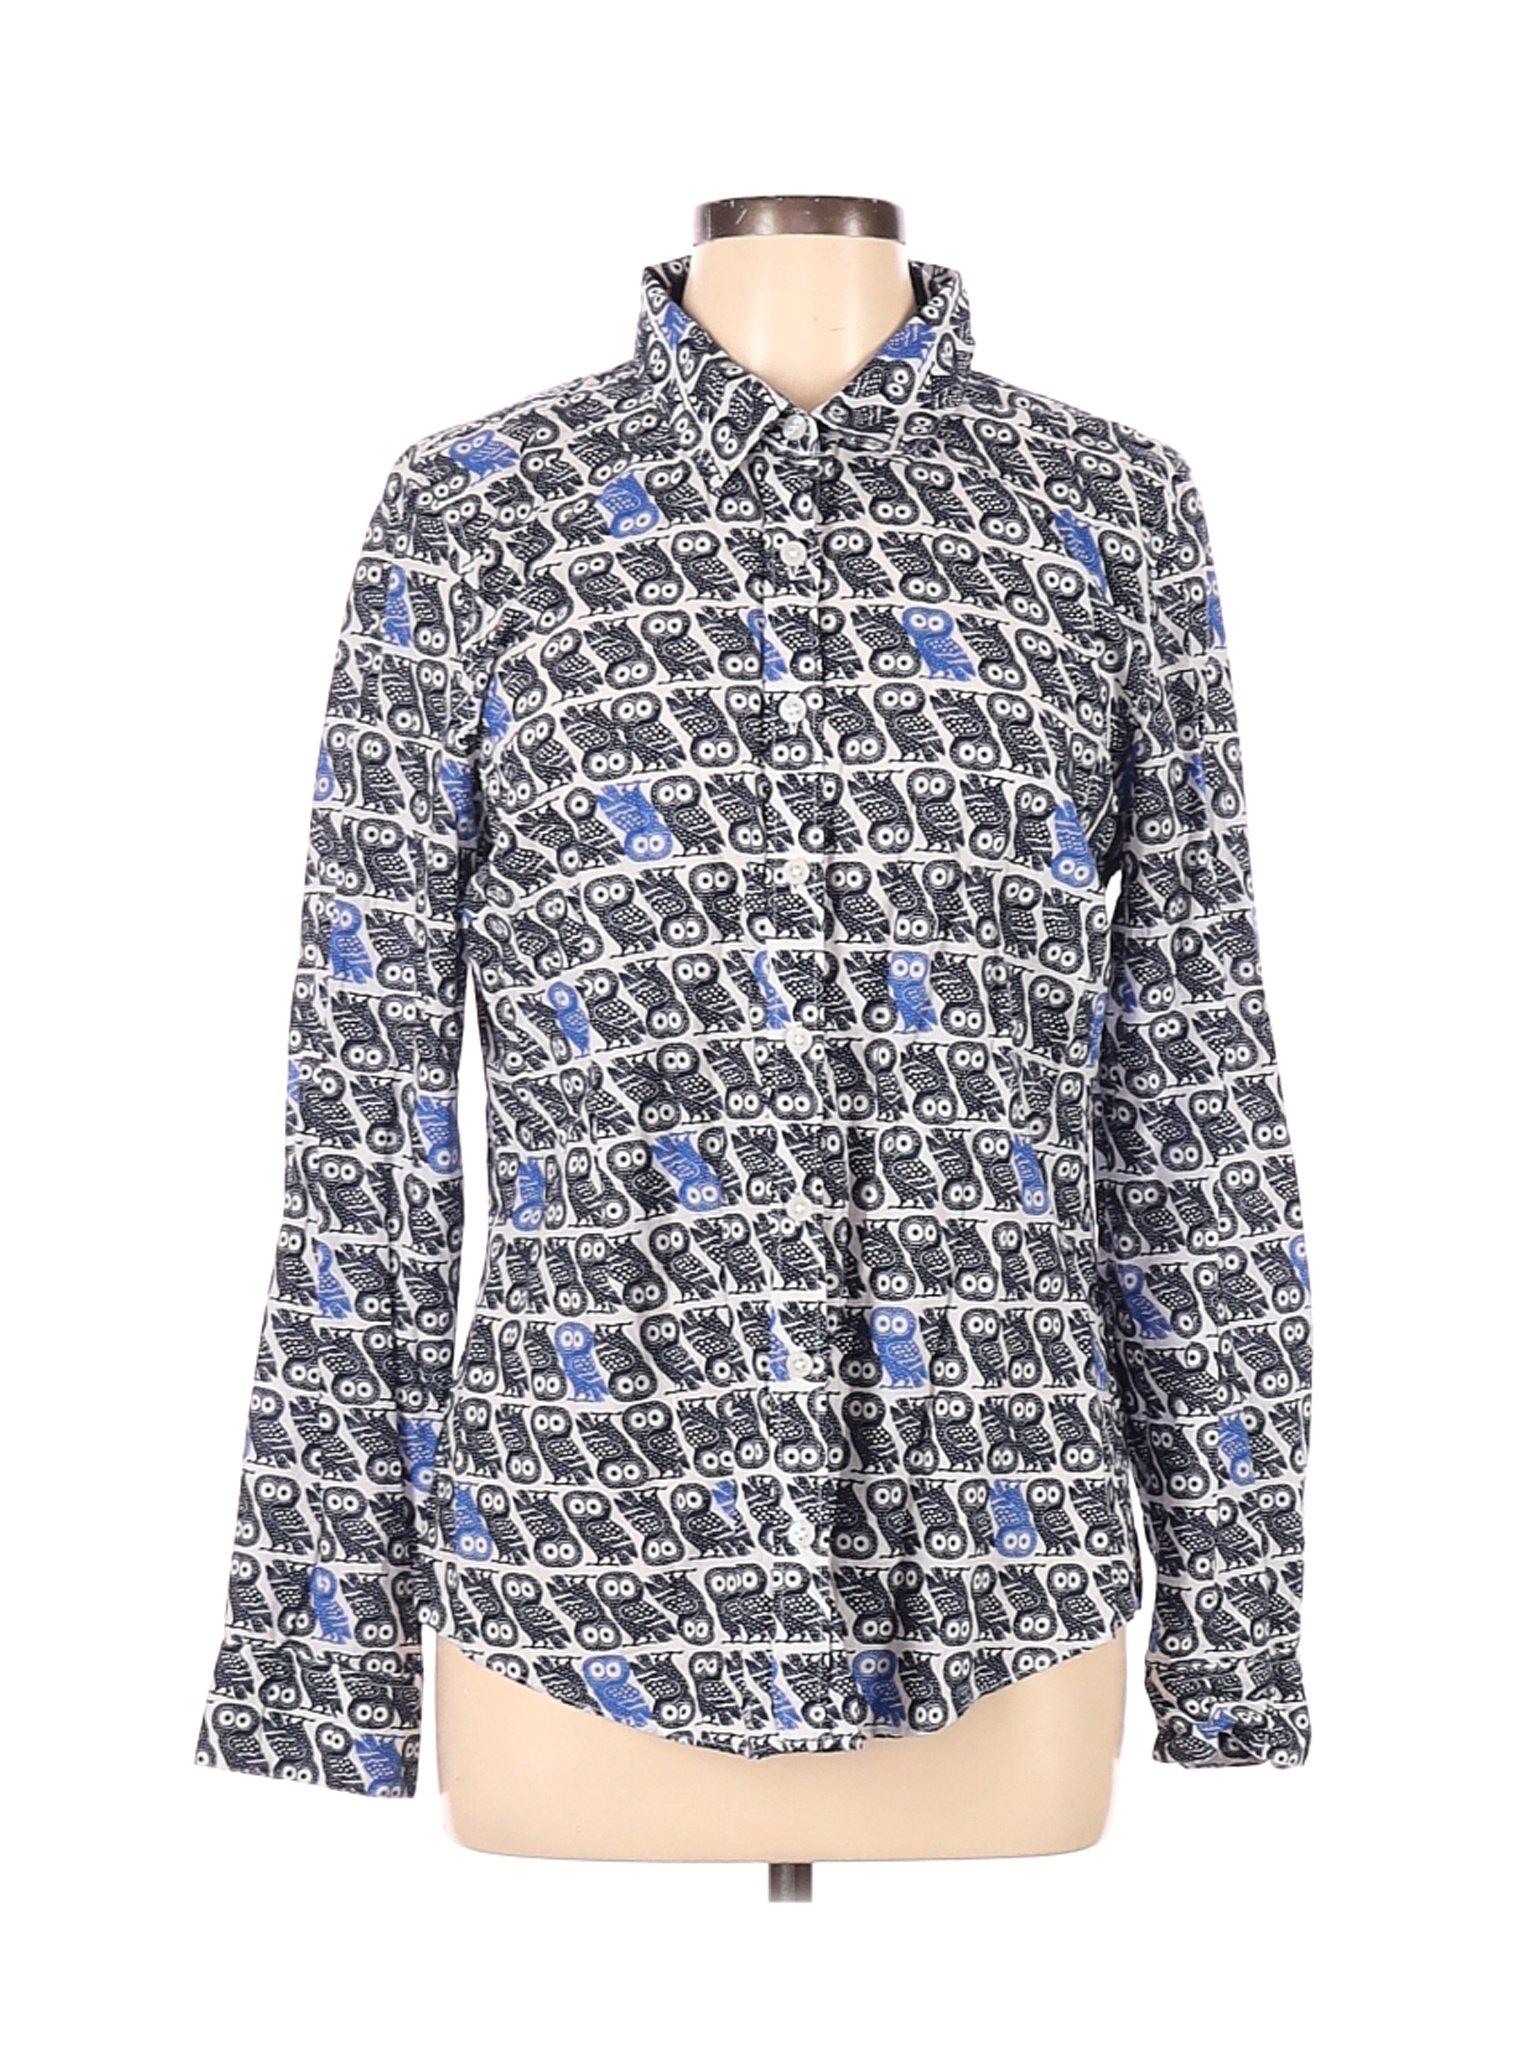 Crown & Ivy Women Blue Long Sleeve Button-Down Shirt L | eBay